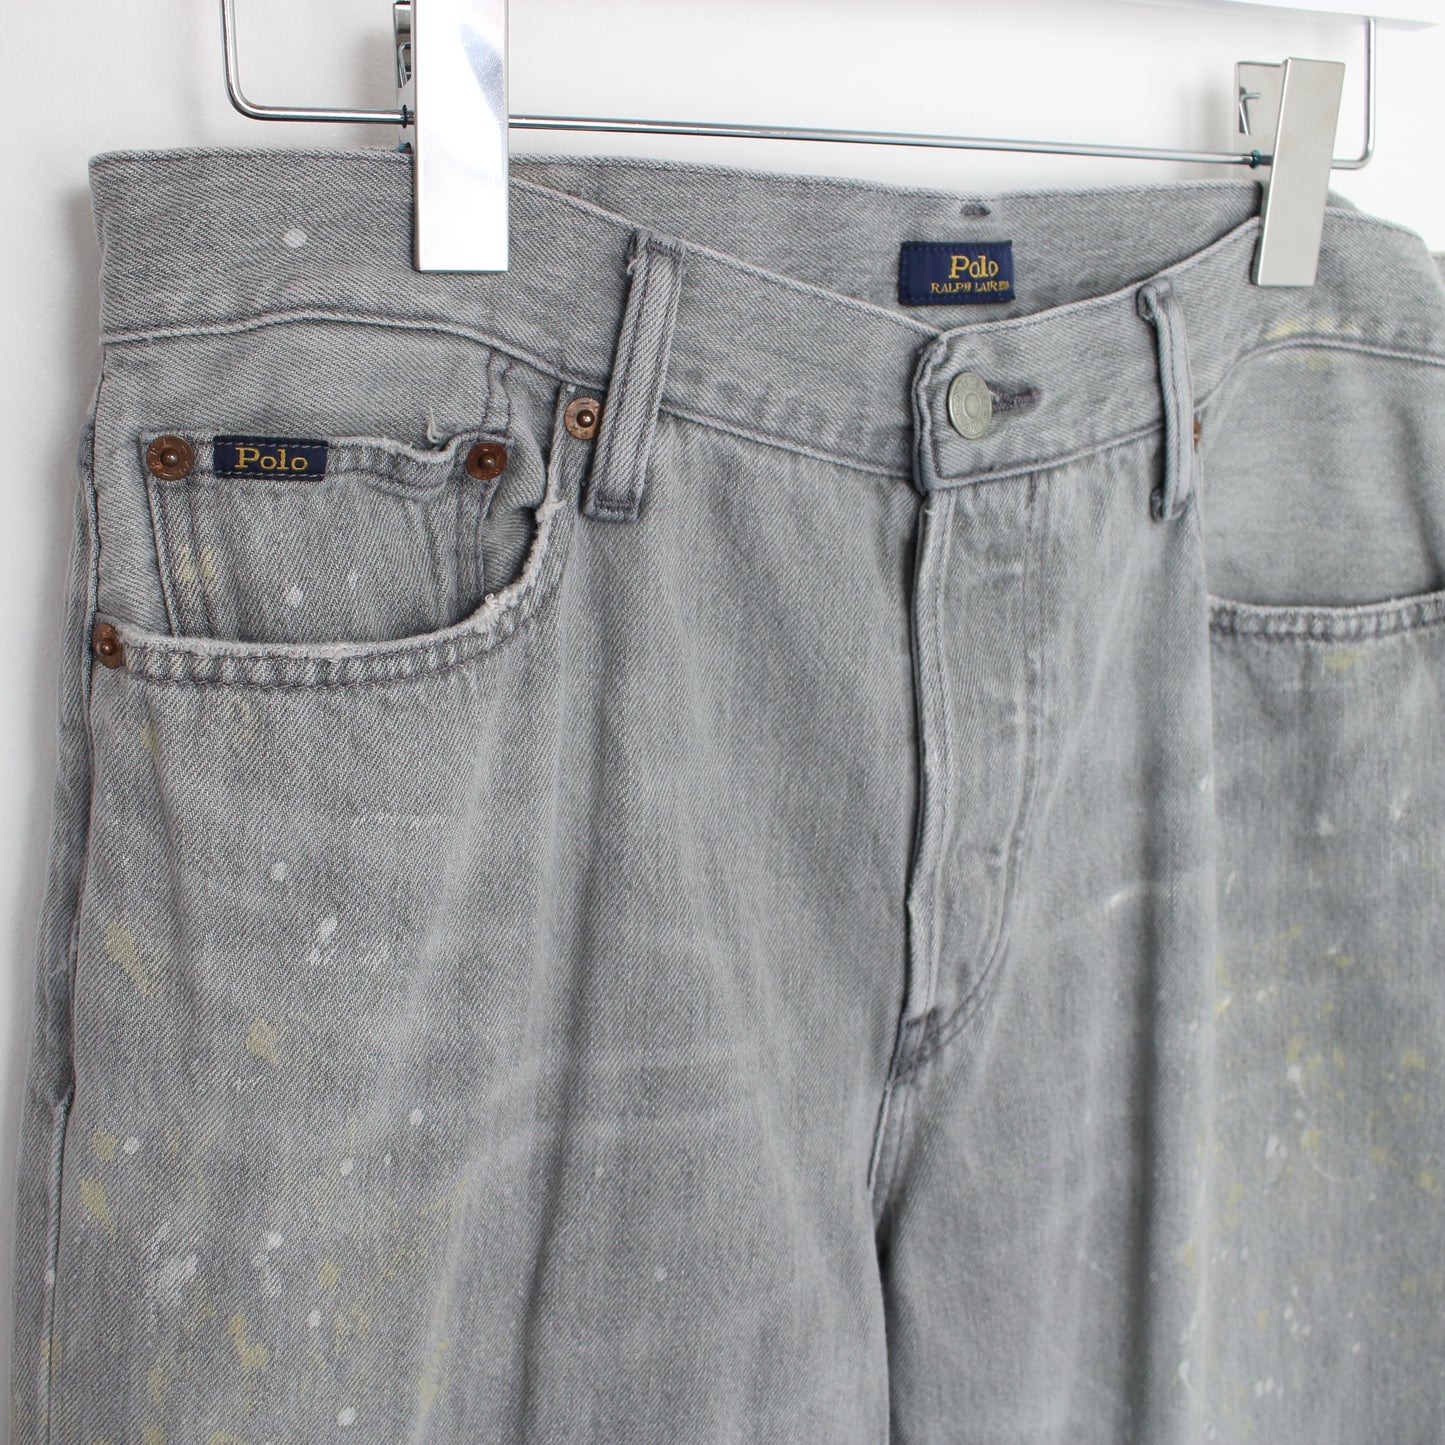 Vintage Ralph Lauren work jeans in grey. Best fits W31 L29